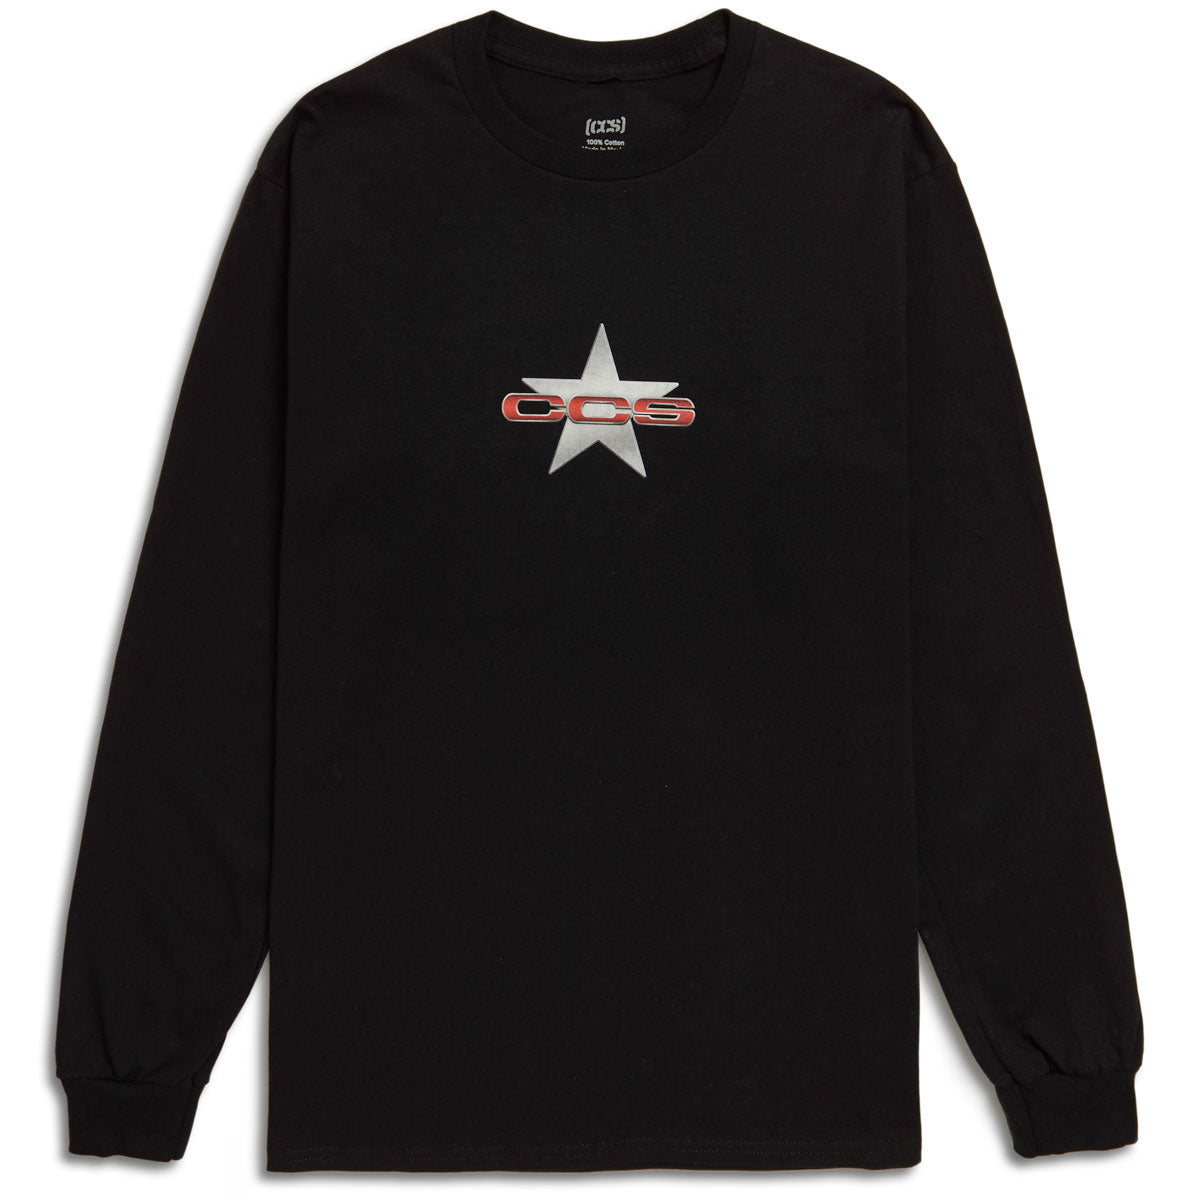 CCS 97 Star Long Sleeve T-Shirt - Black - MD image 1